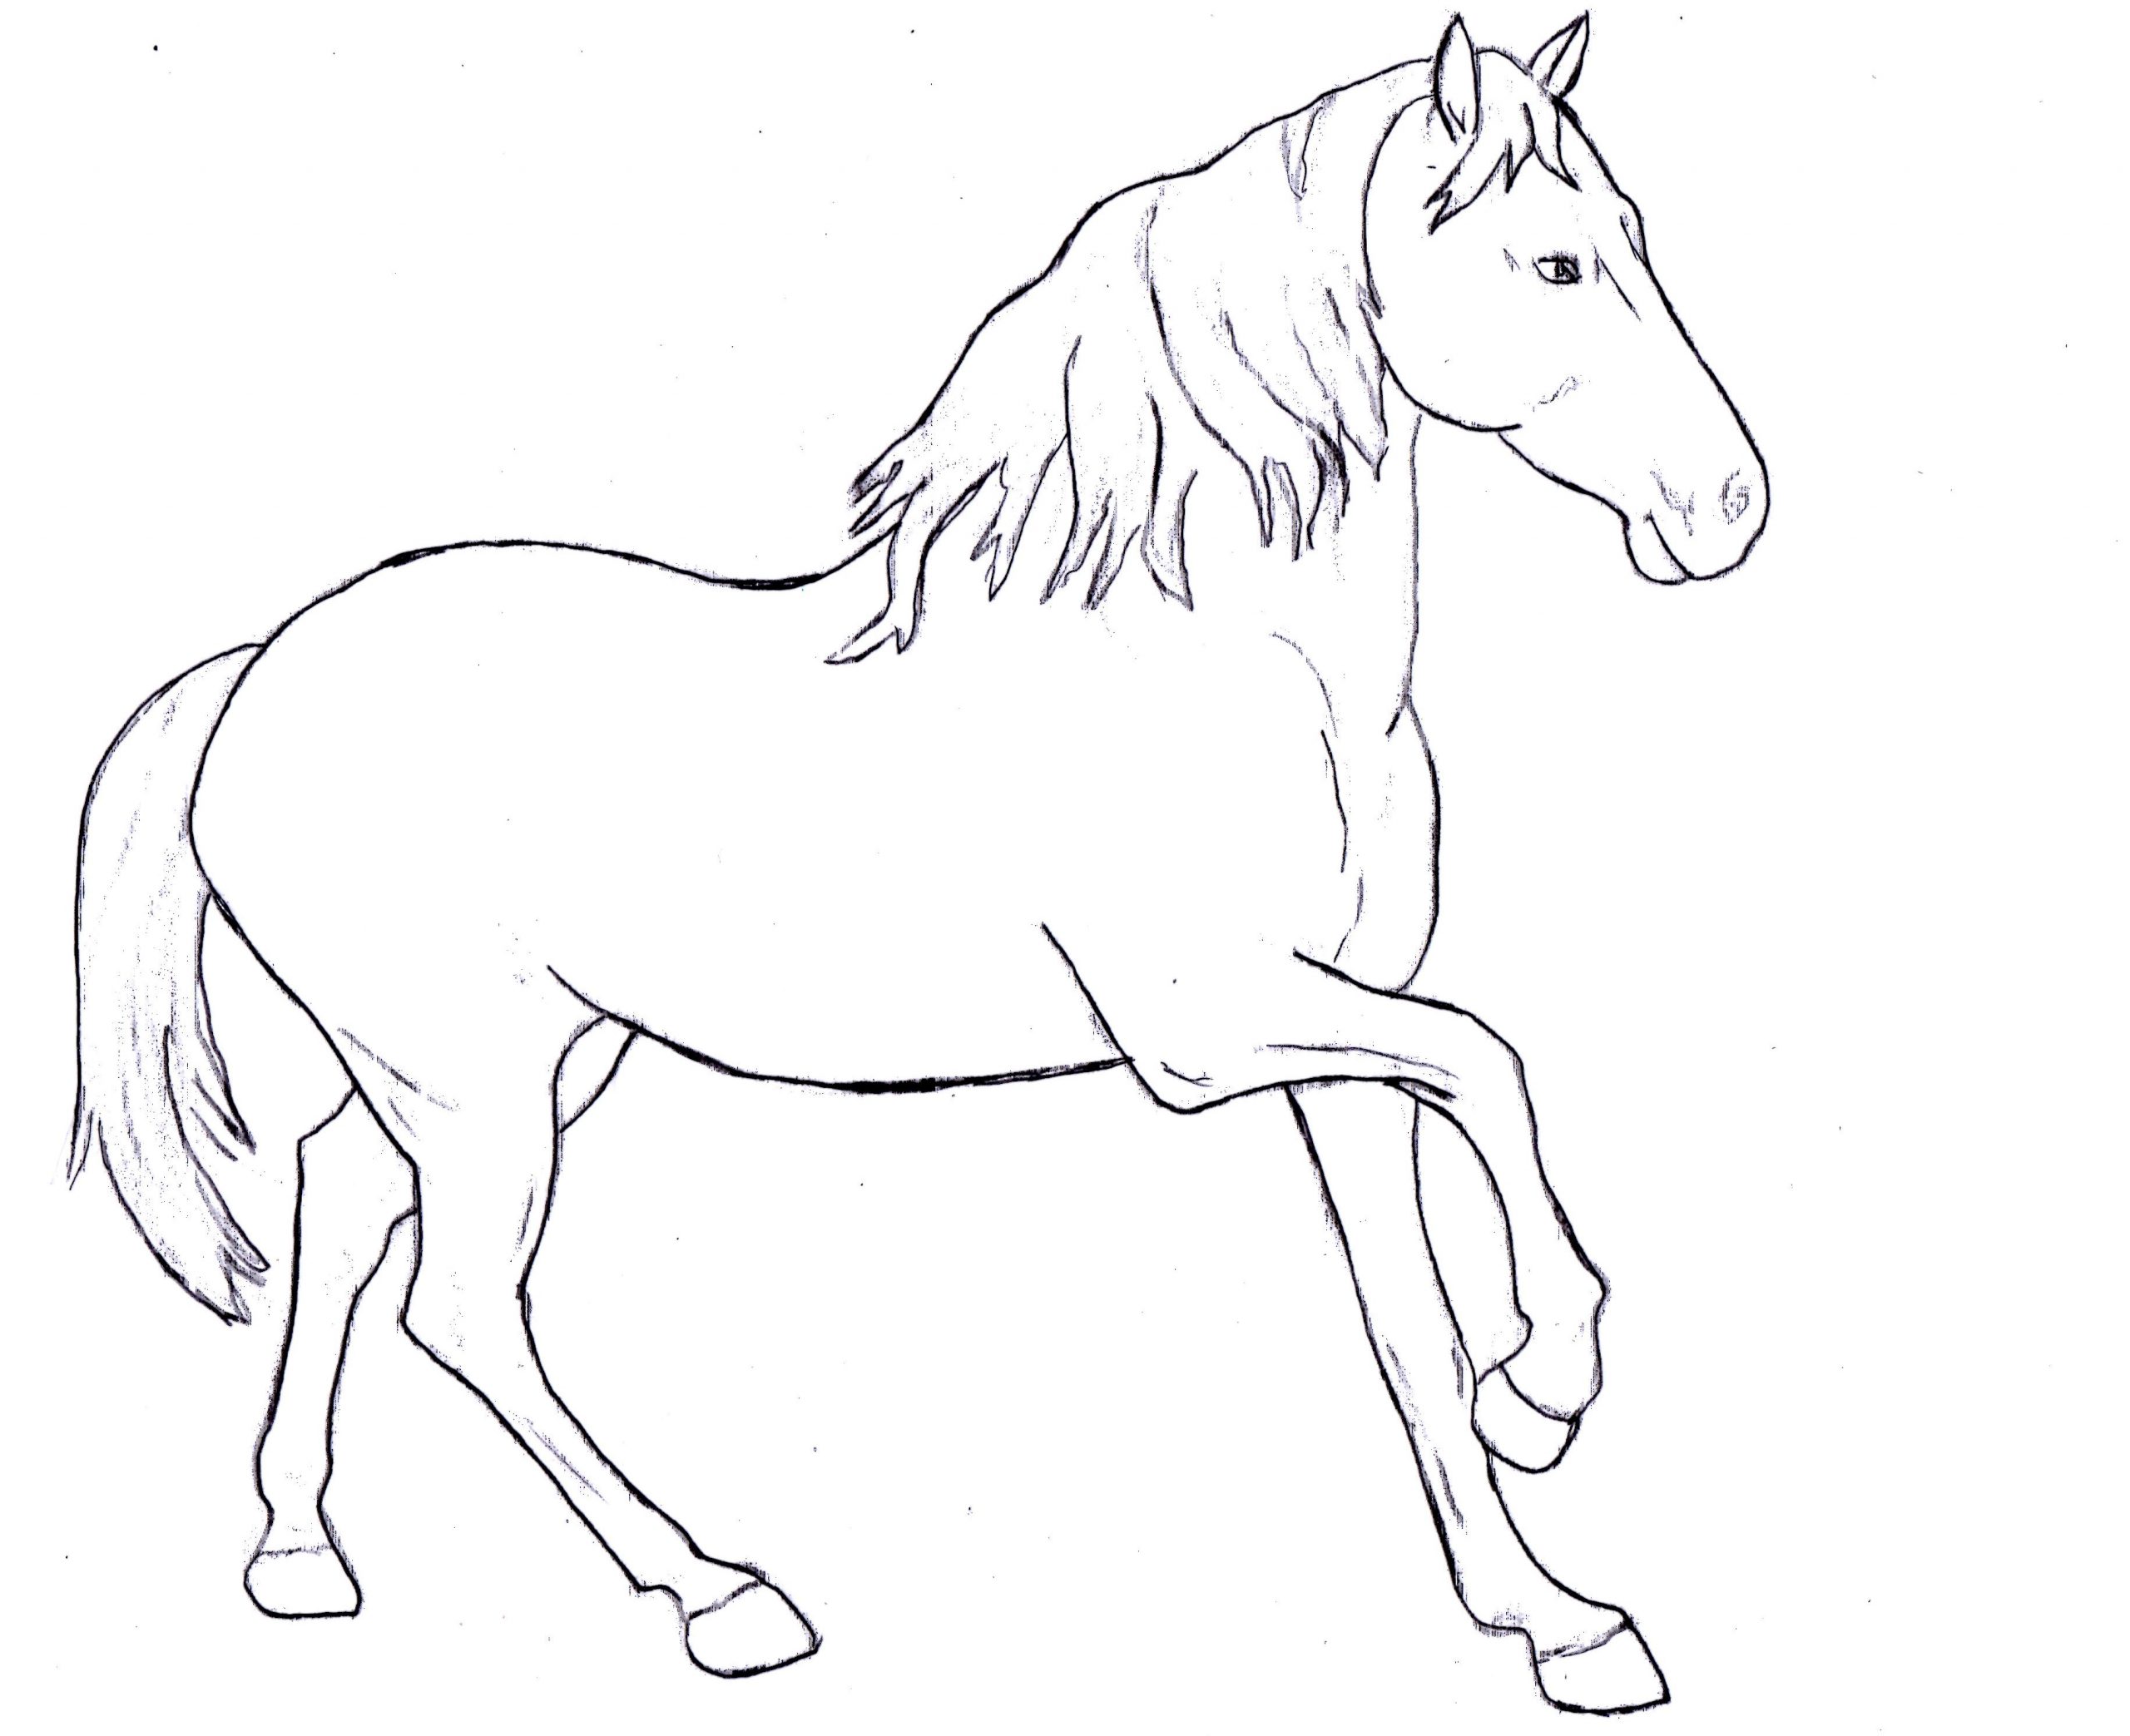 Horse_2